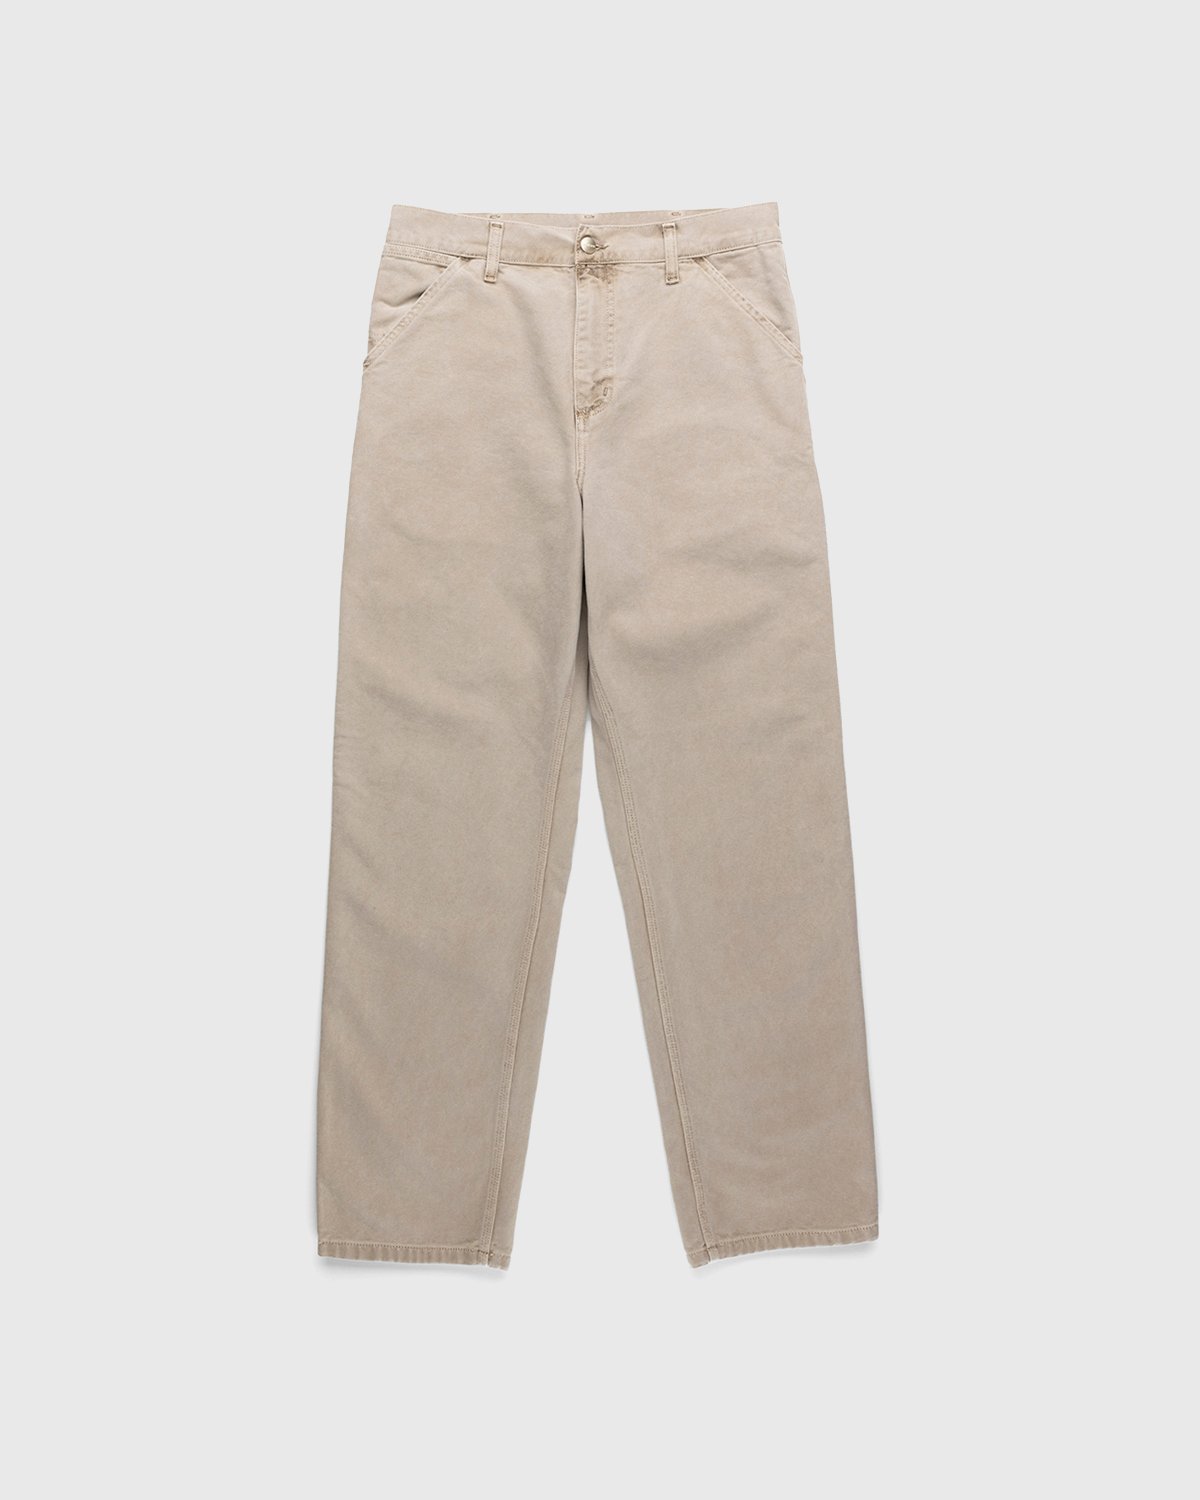 Carhartt WIP - Single Knee Pant Dusty Hamilton Brown Faded - Clothing - Beige - Image 1